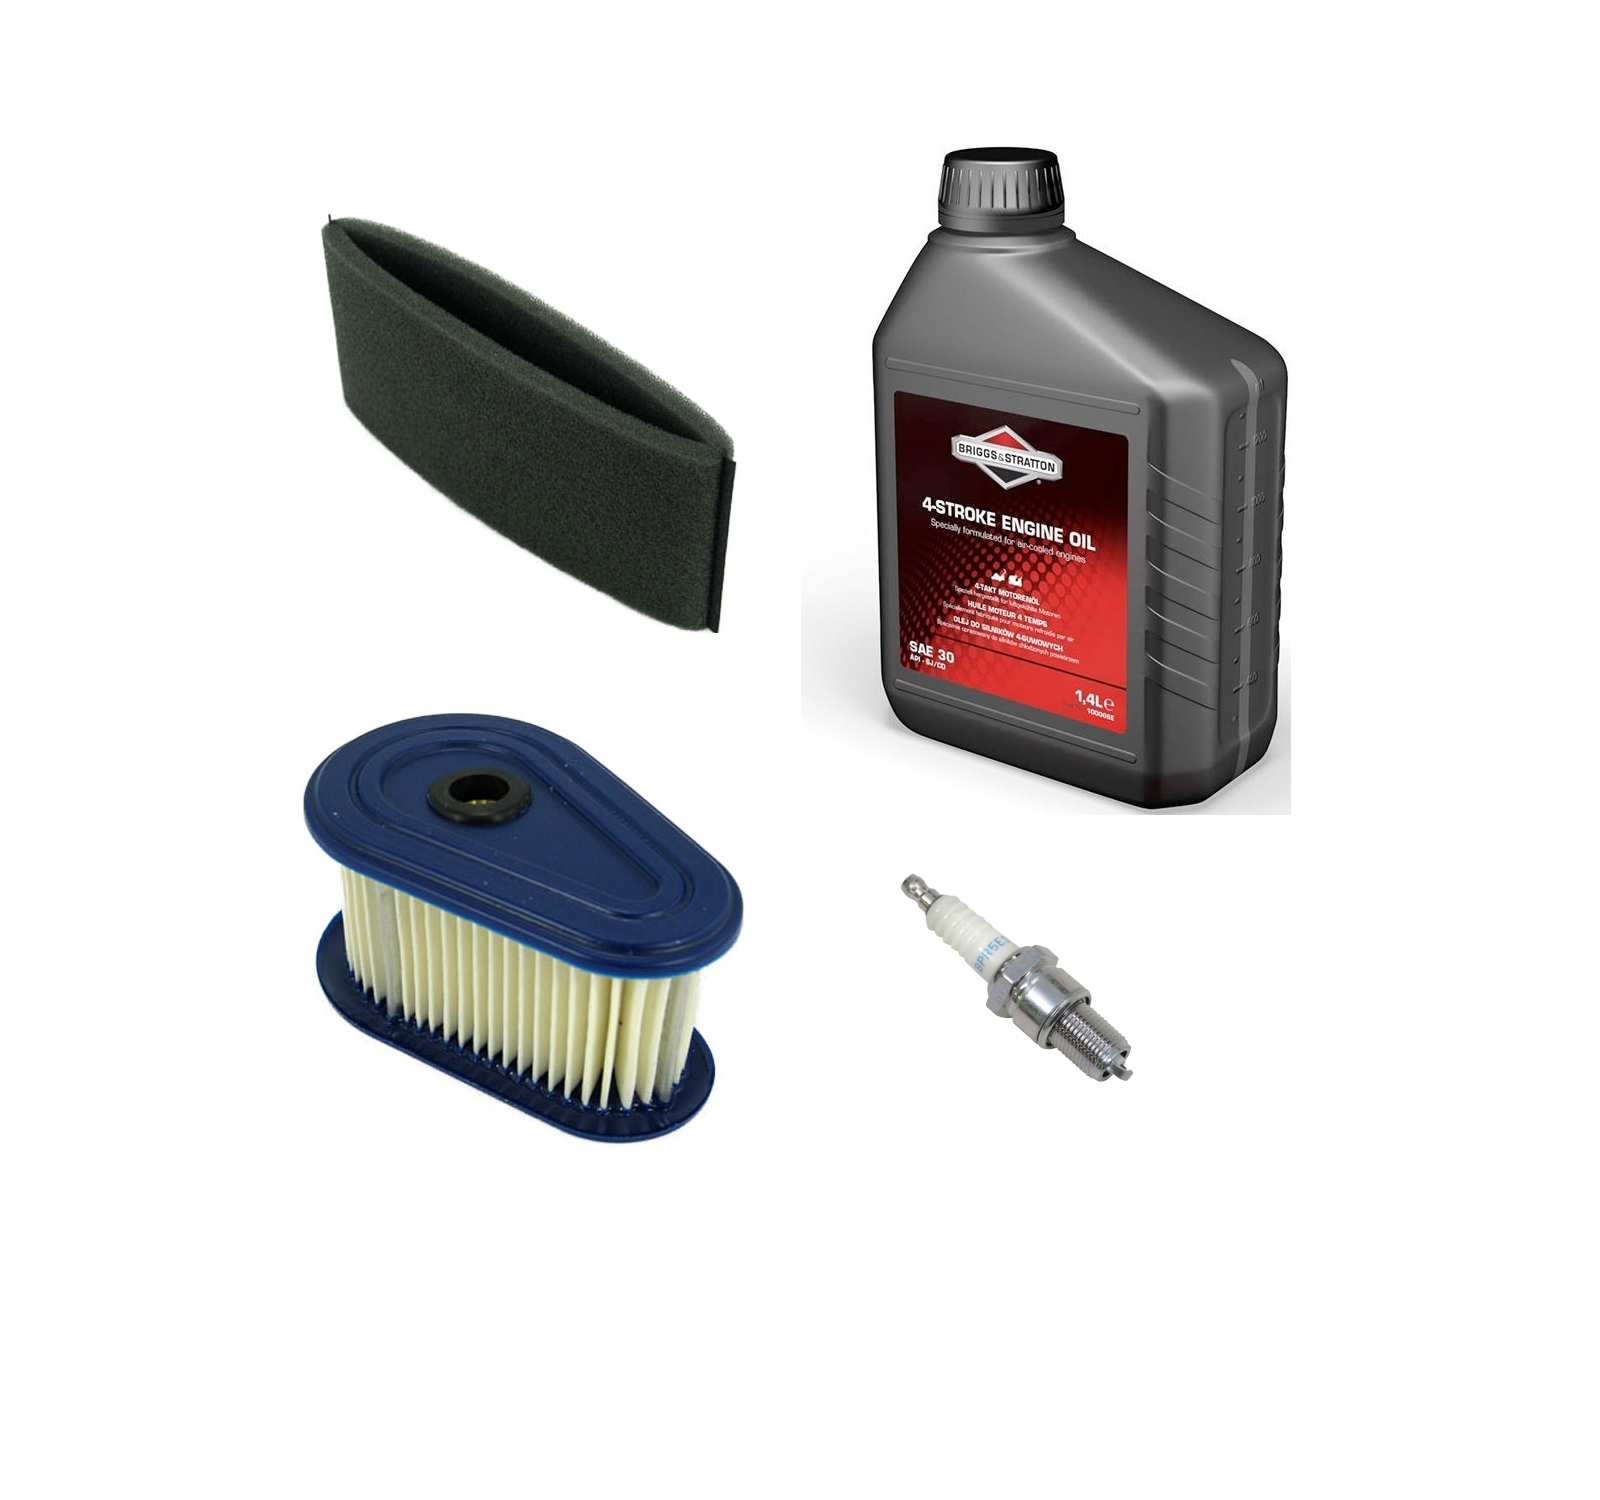 Hipa Air Filter/Pre Cleaner Fuel Filter Tune Up Kit for John Deere GT235 GT235E LTR166 LT166 LT170 LX288 SST16 SST18 Lawn Mower 